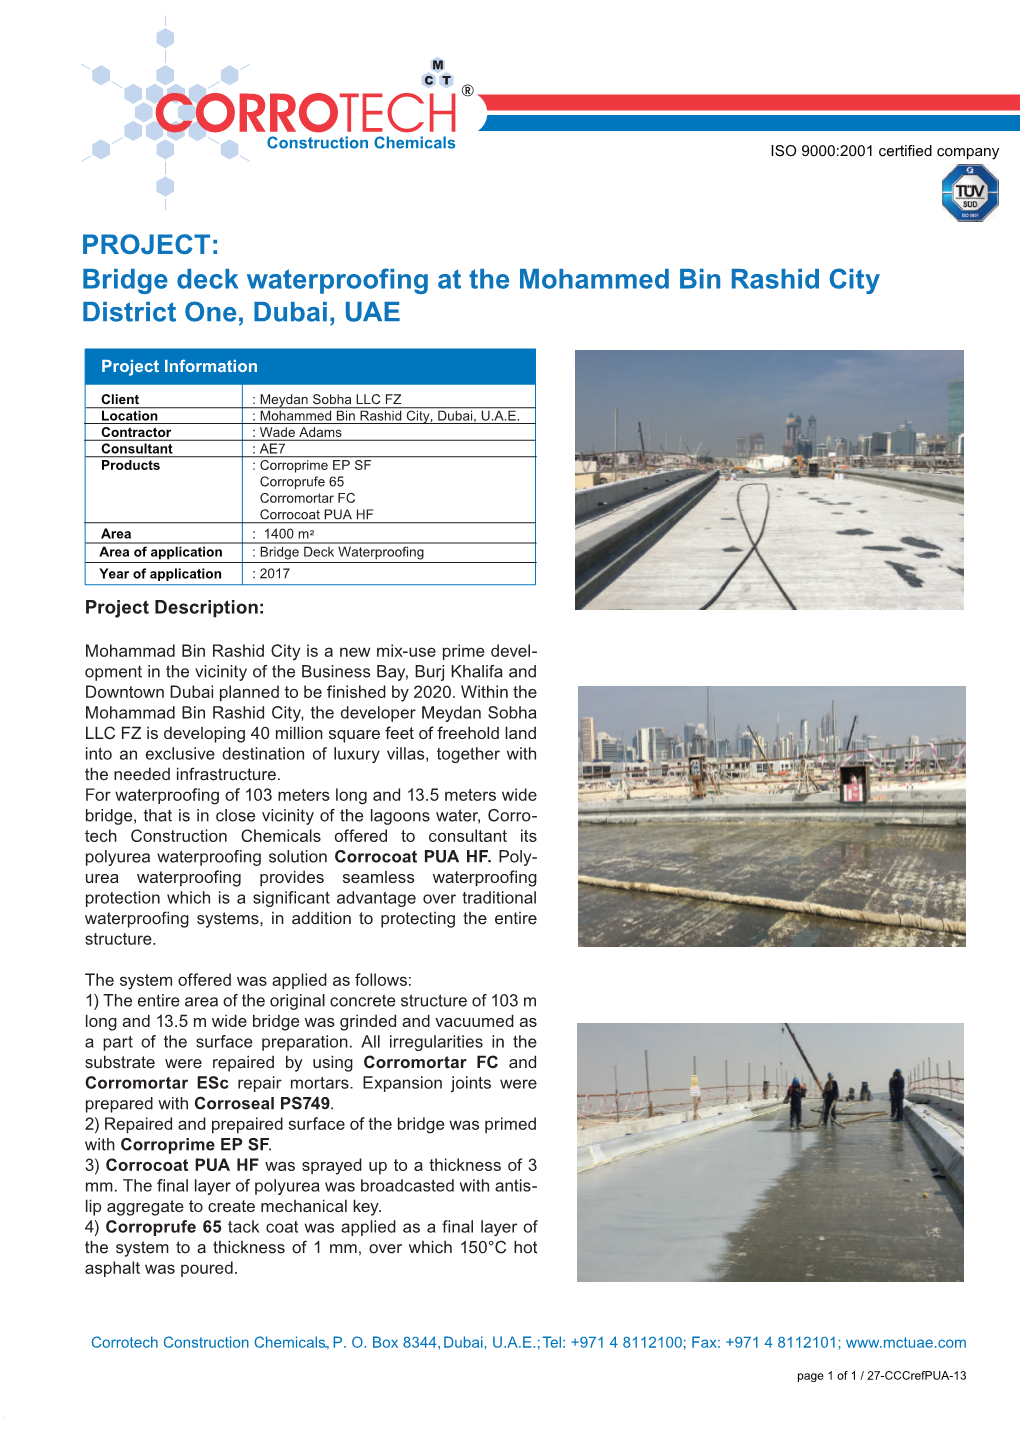 Bridge Deck Waterproofing at the Mohammed Bin Rashid City District One, Dubai, UAE